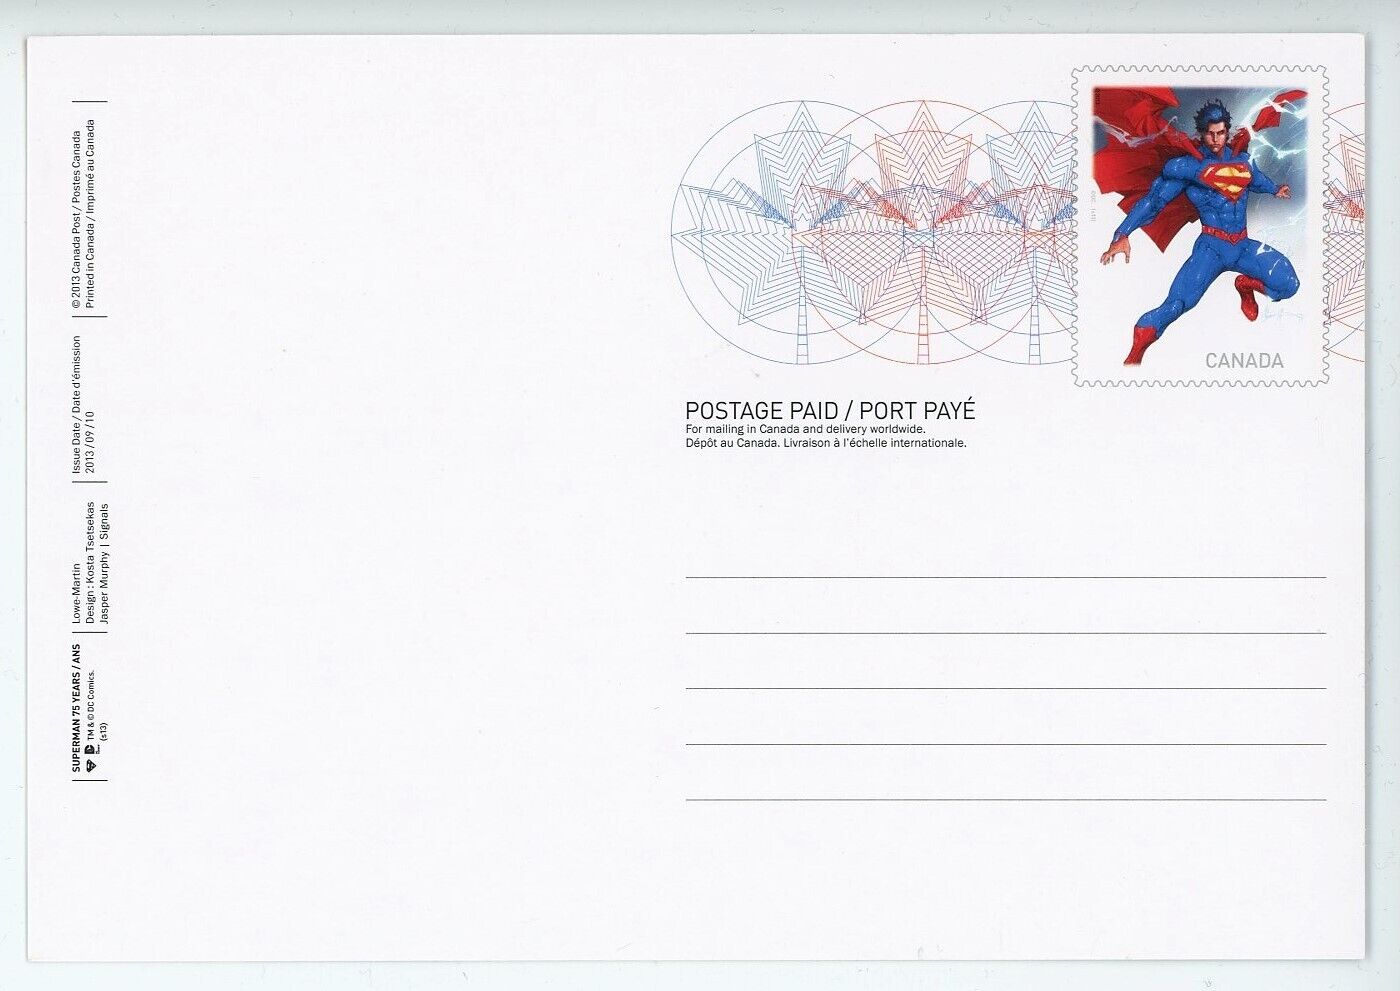 Superman DC Comics 2013 Postcards Pre Paid Postage Canada Set of 5 #20327*